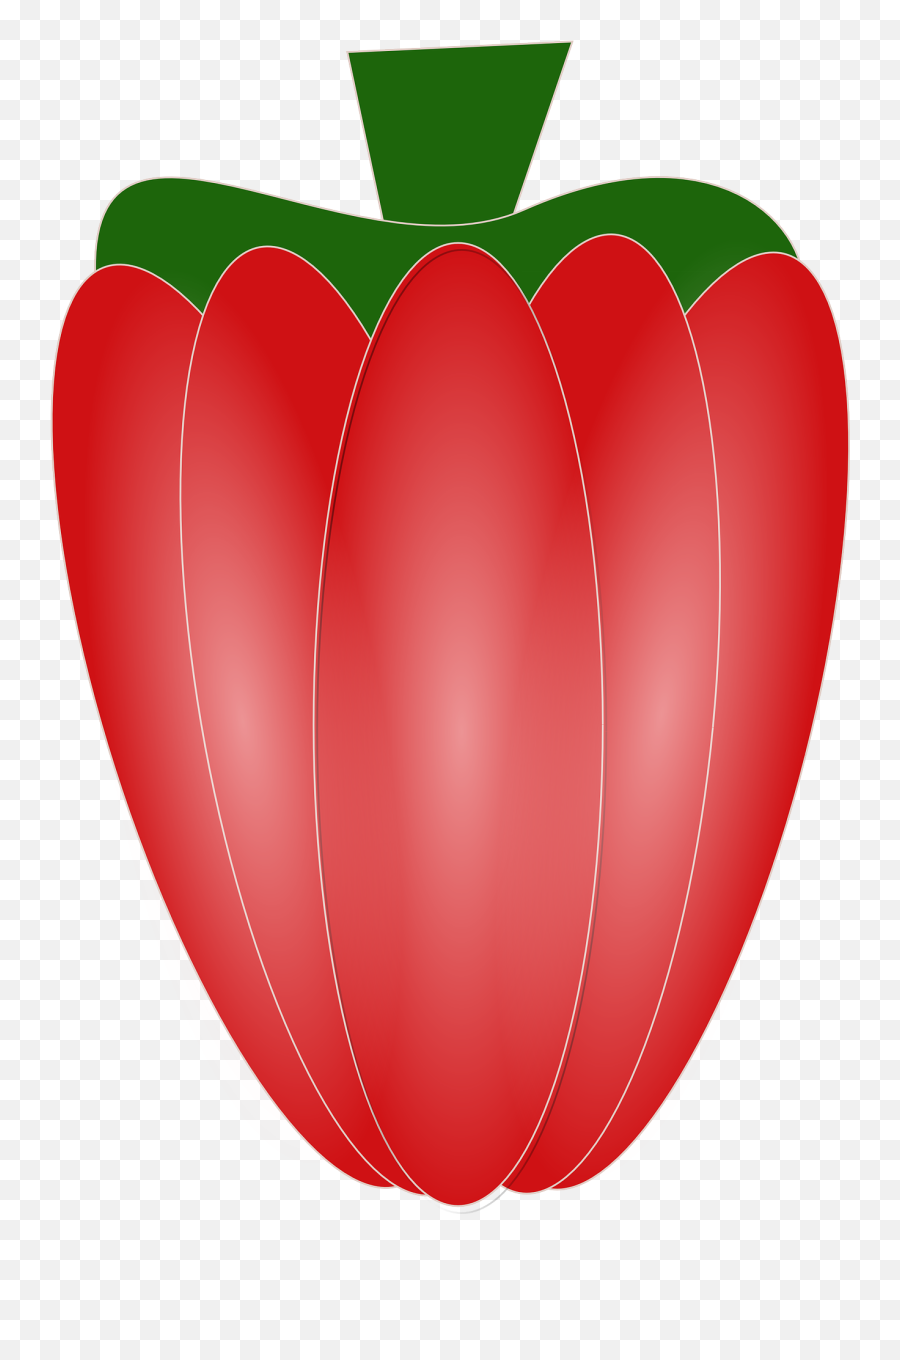 Red Paprika Pepper Clipart Free Image Download - Paprika Emoji,Spice Clipart